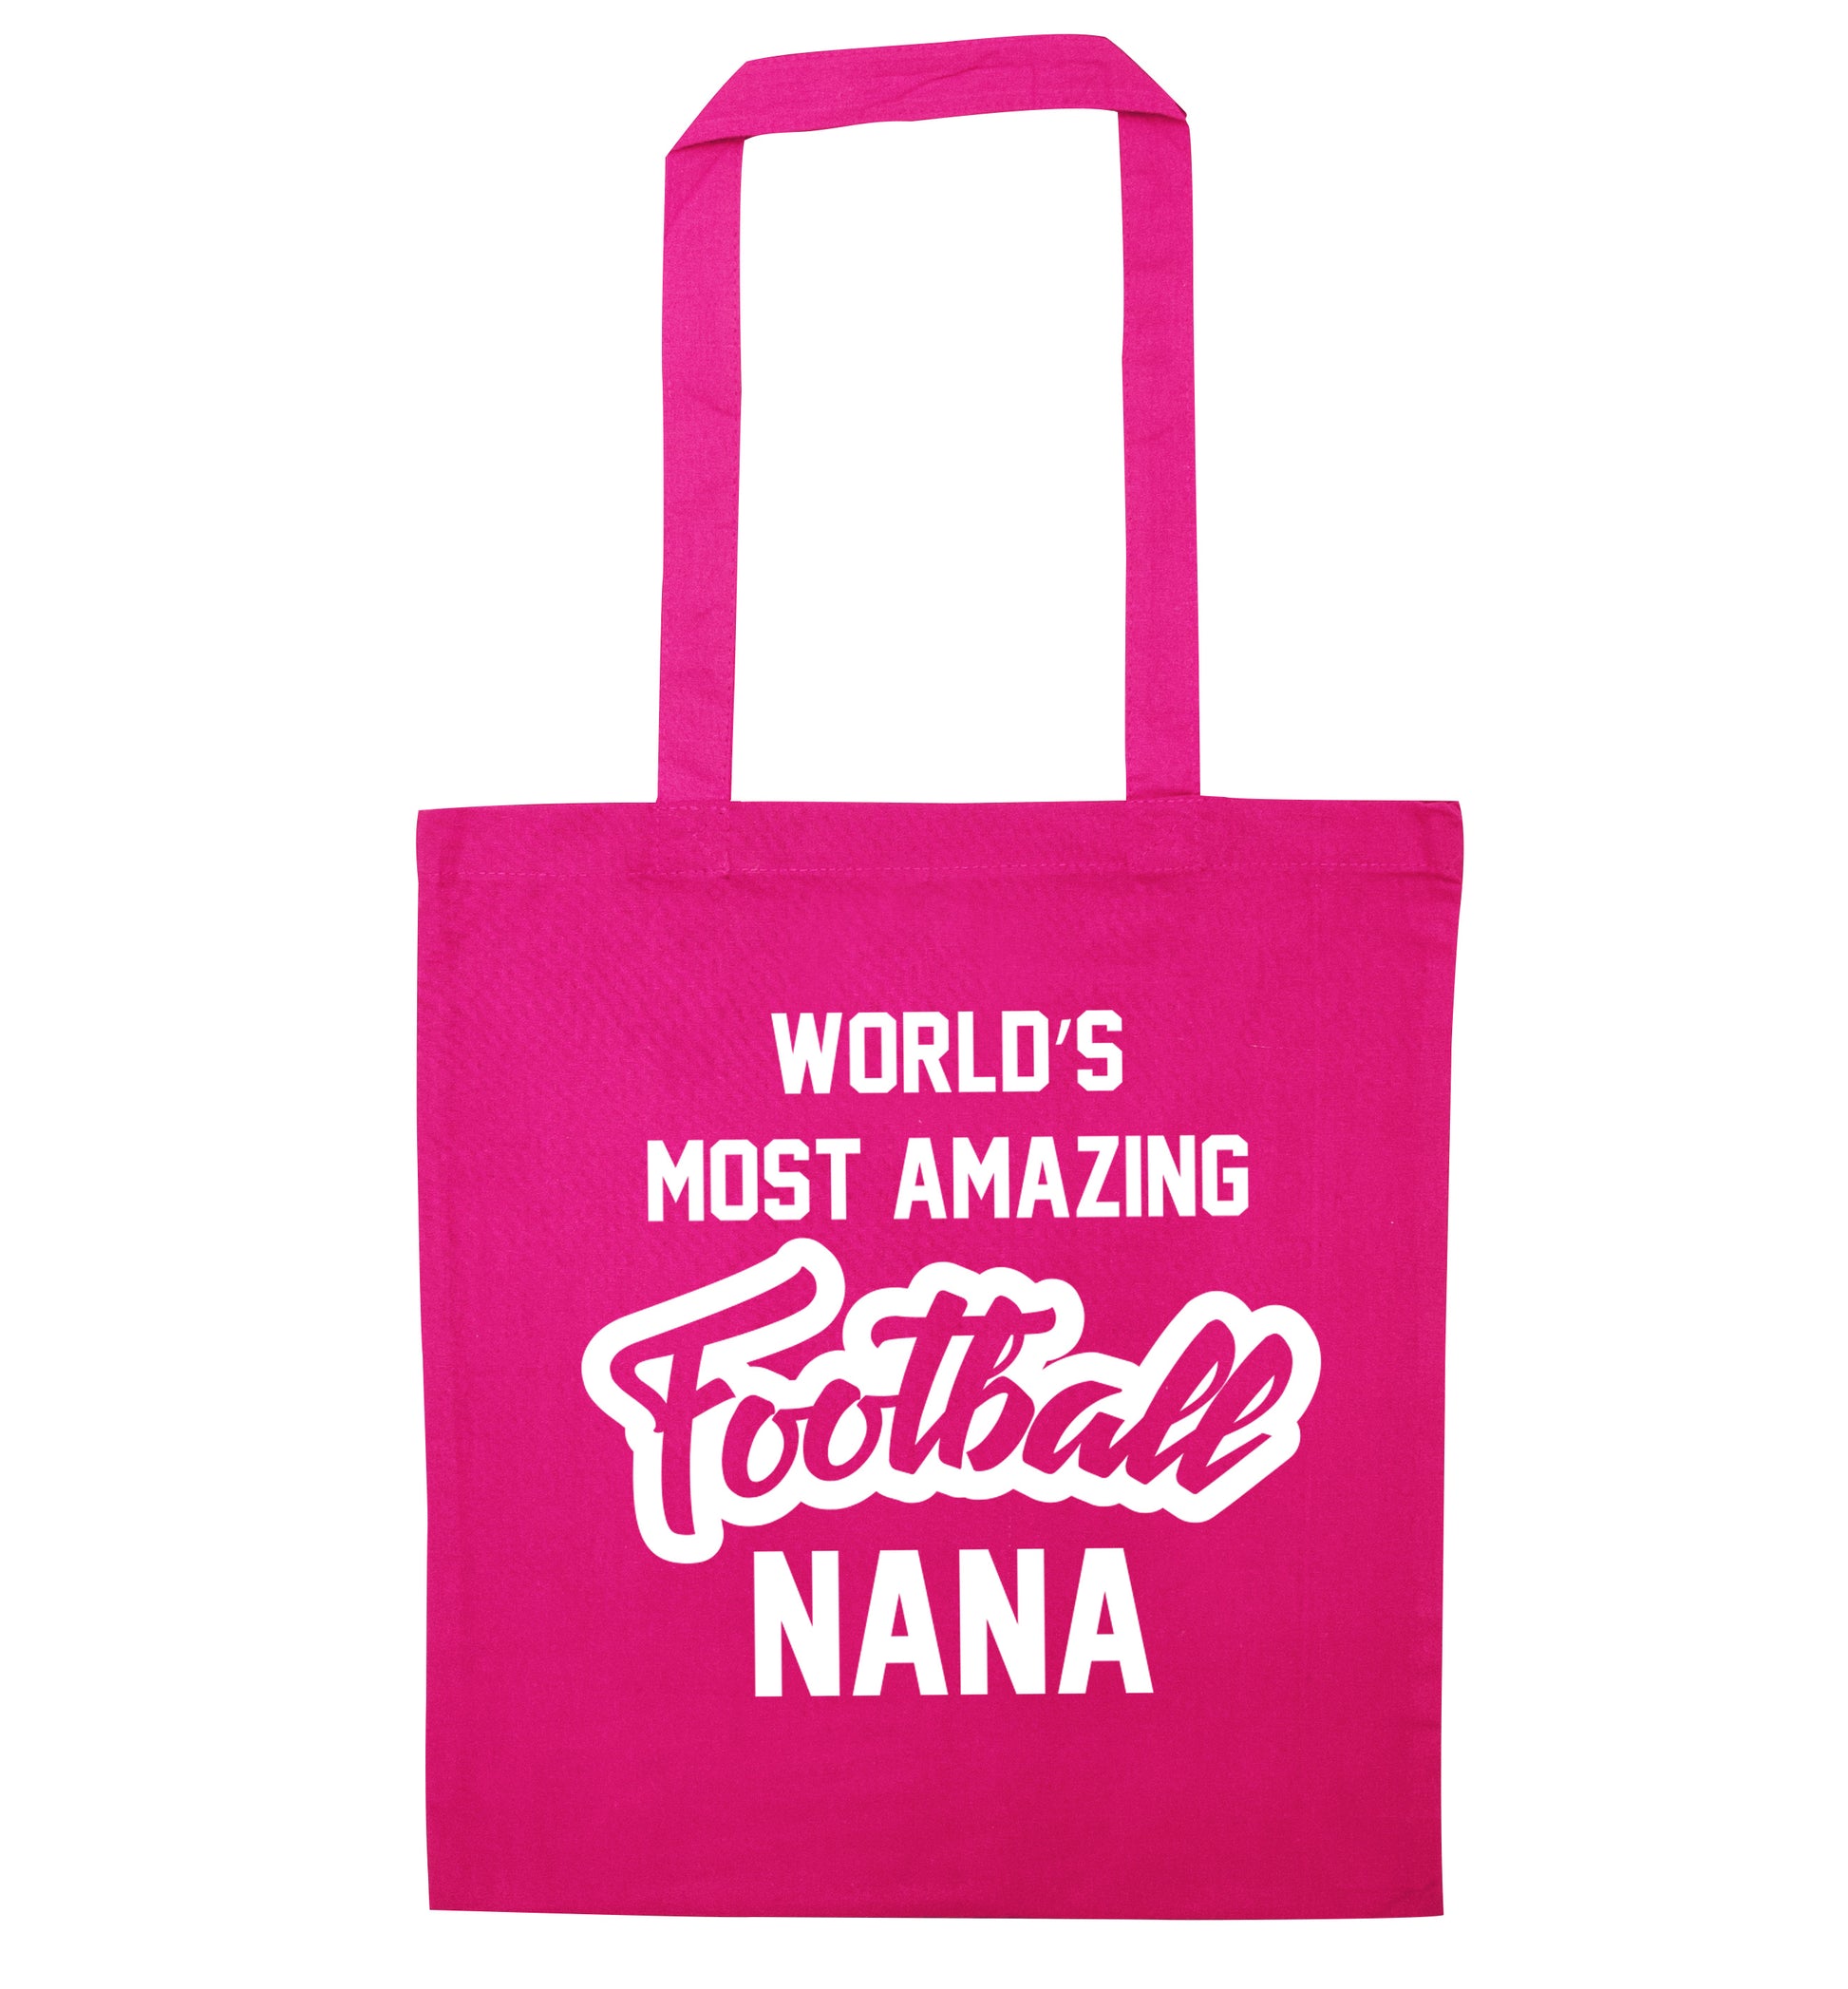 Worlds most amazing football nana pink tote bag